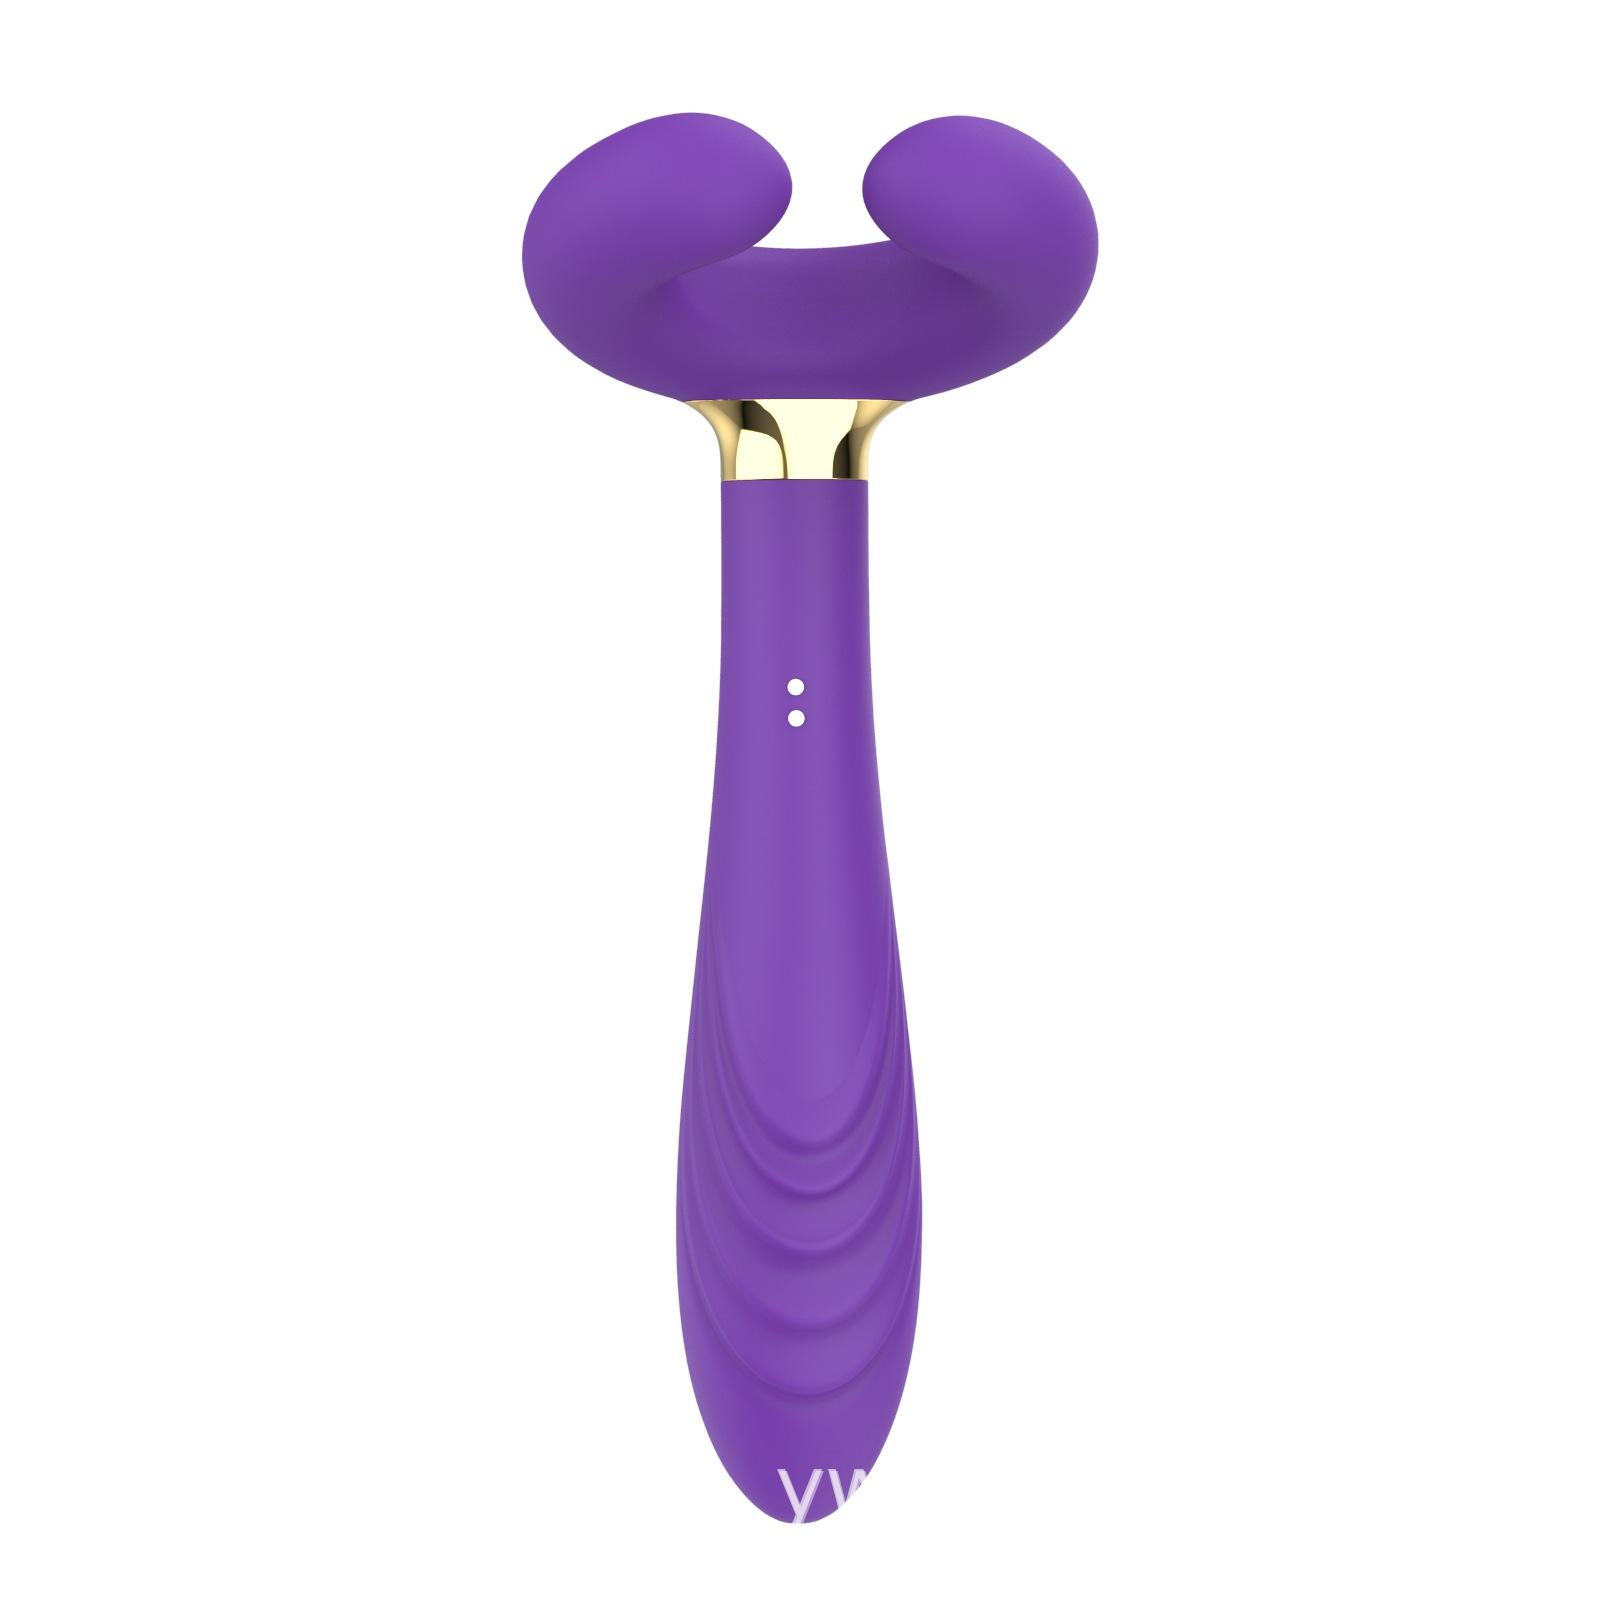 Orissi magnetic attraction charging C-shaped three head vibrator flirting toy